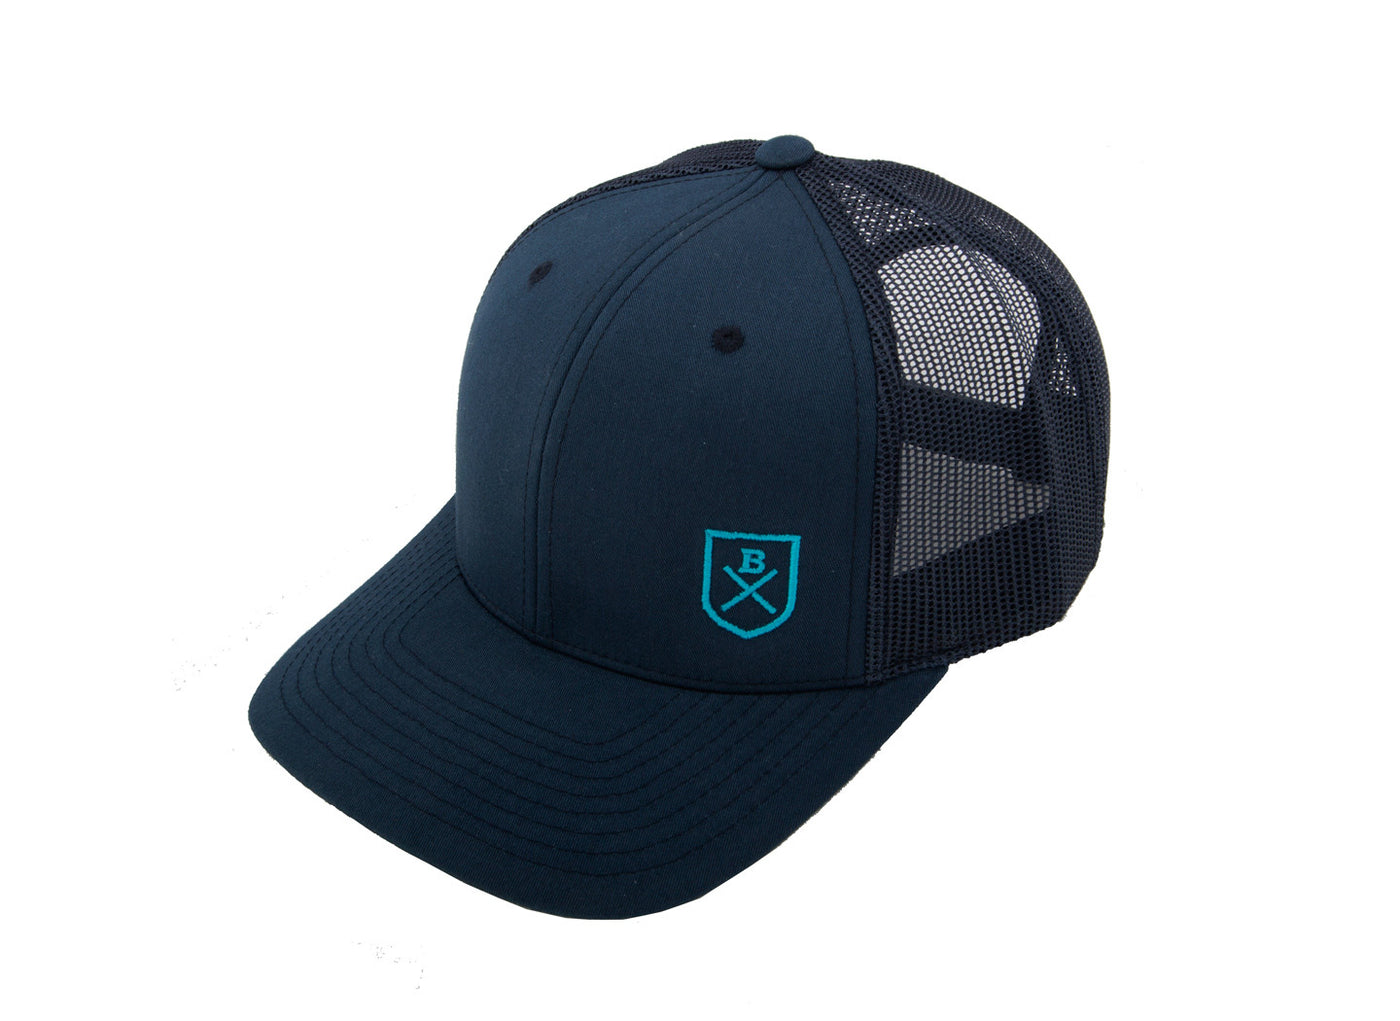  Bluesmiths Classic Trucker Cap - Blue with Shield Logo